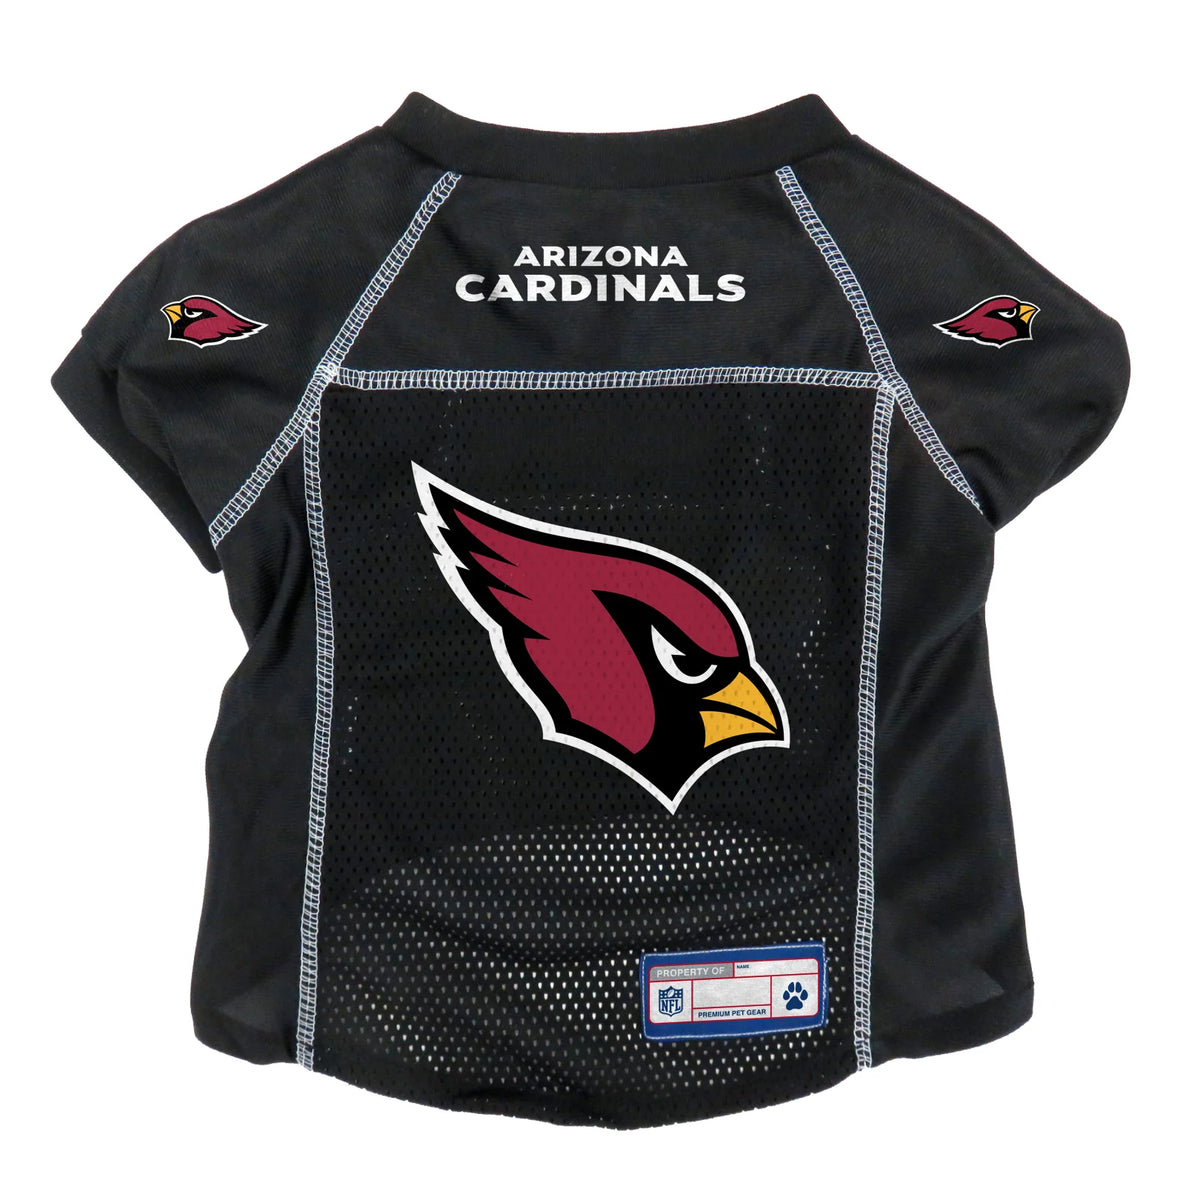 Arizona Cardinals Merchandise, Cardinals Apparel, Jerseys & Gear